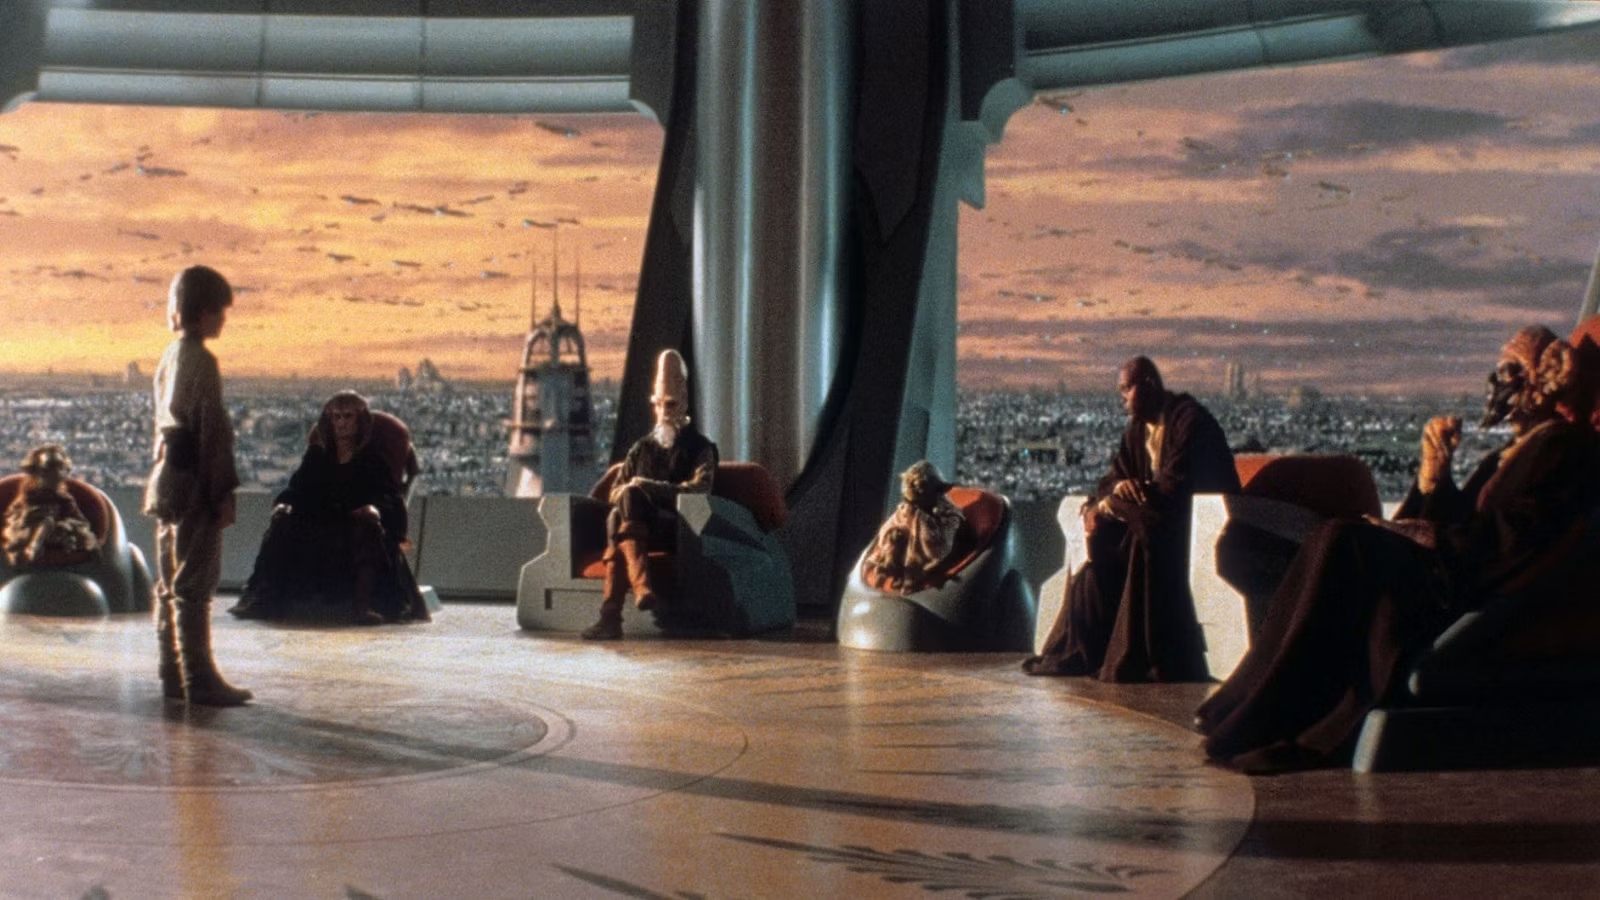 The Jedi High Council tests Anakin Skywalker in Star Wars: The Phantom Menace